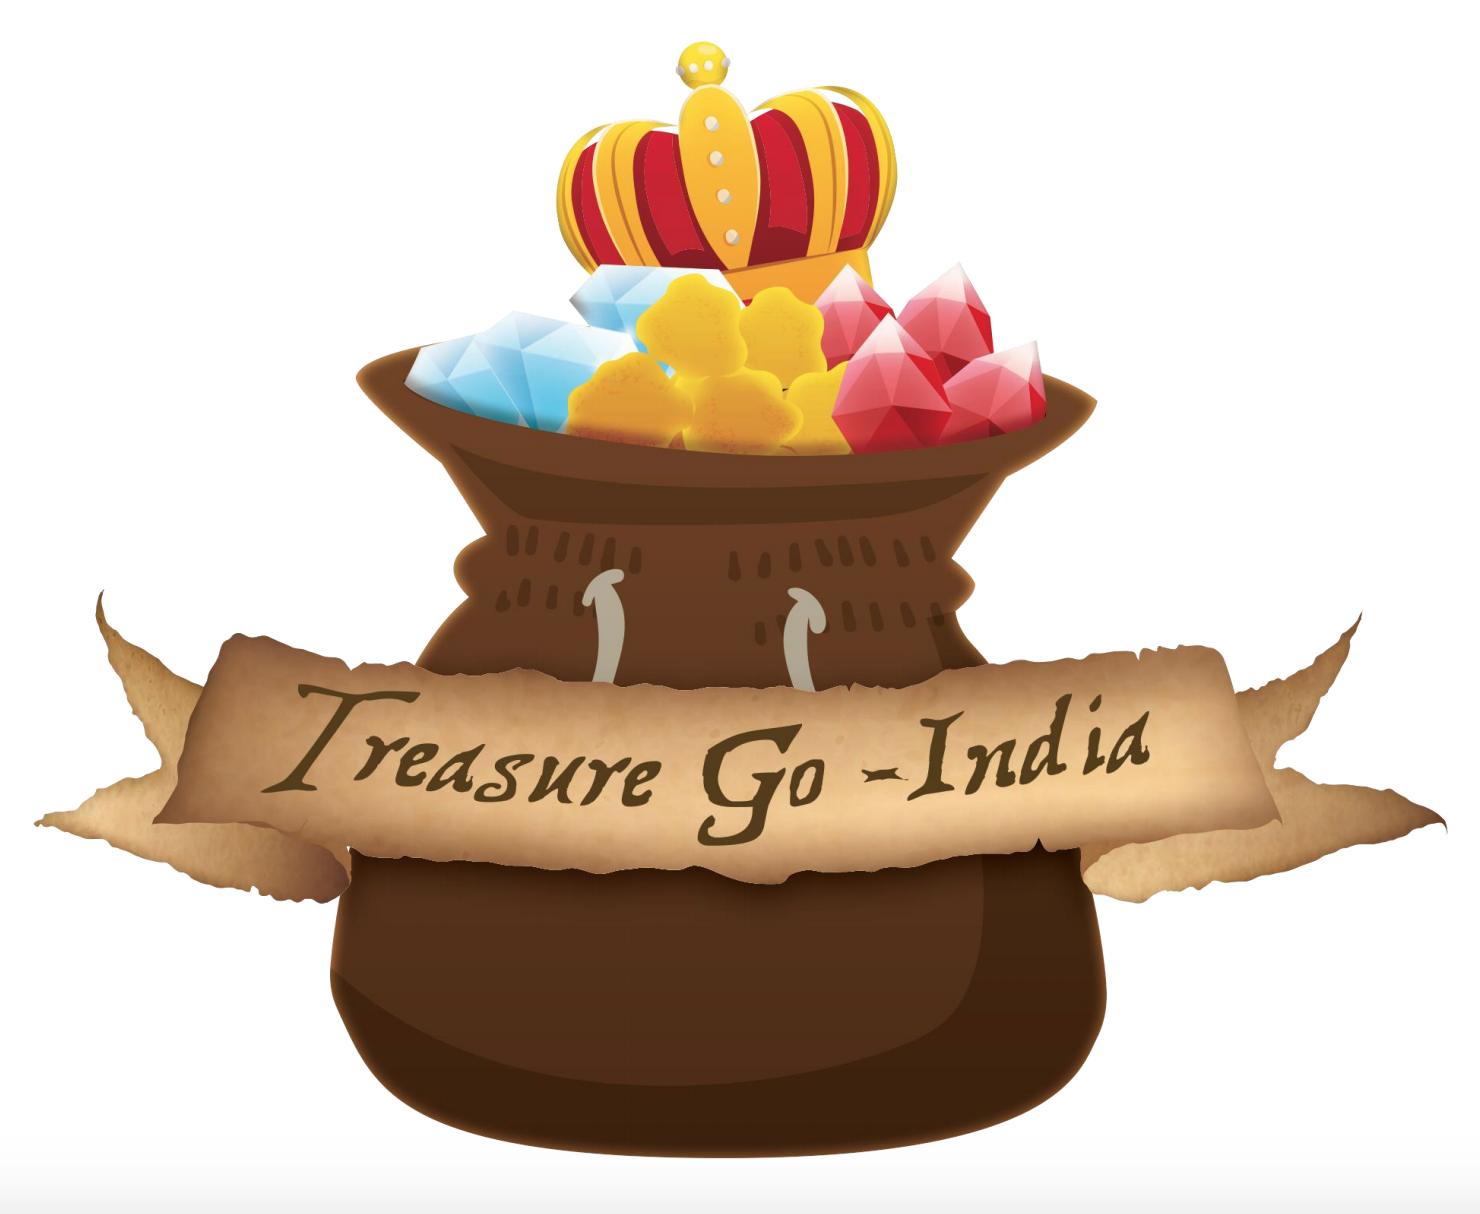 Treasure Go: India